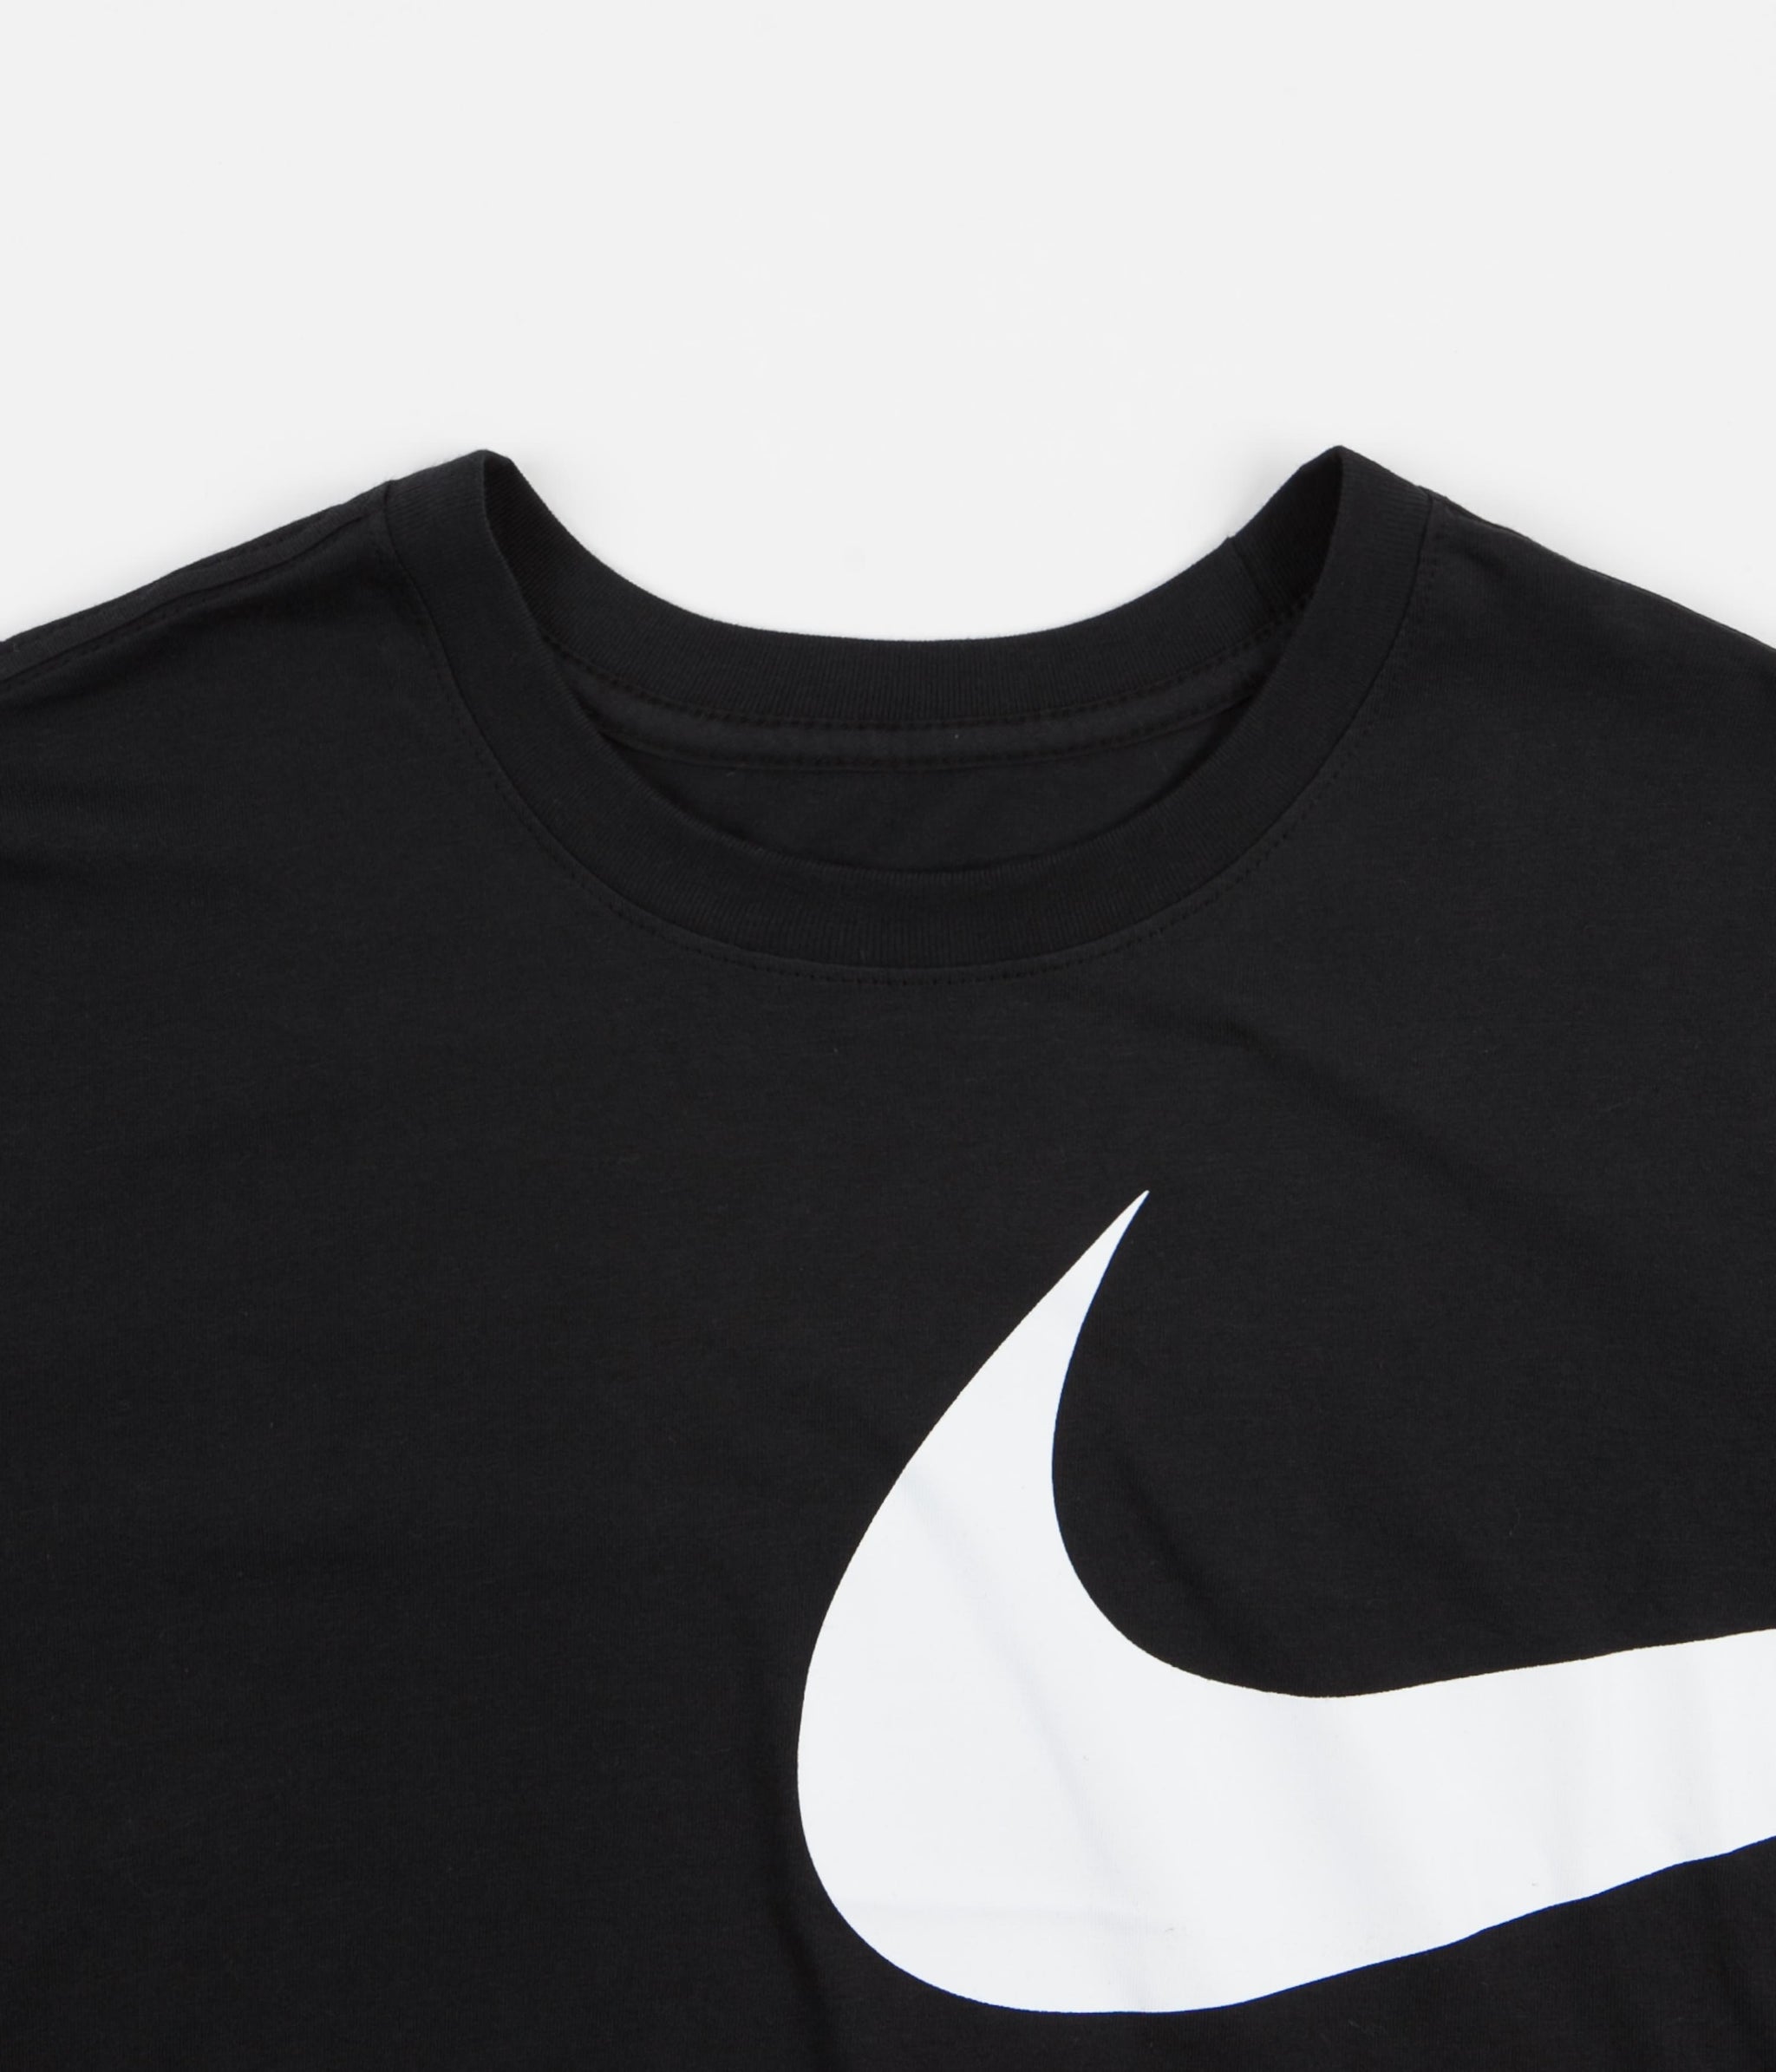 Nike Swoosh GX T-Shirt - Black | Always in Colour